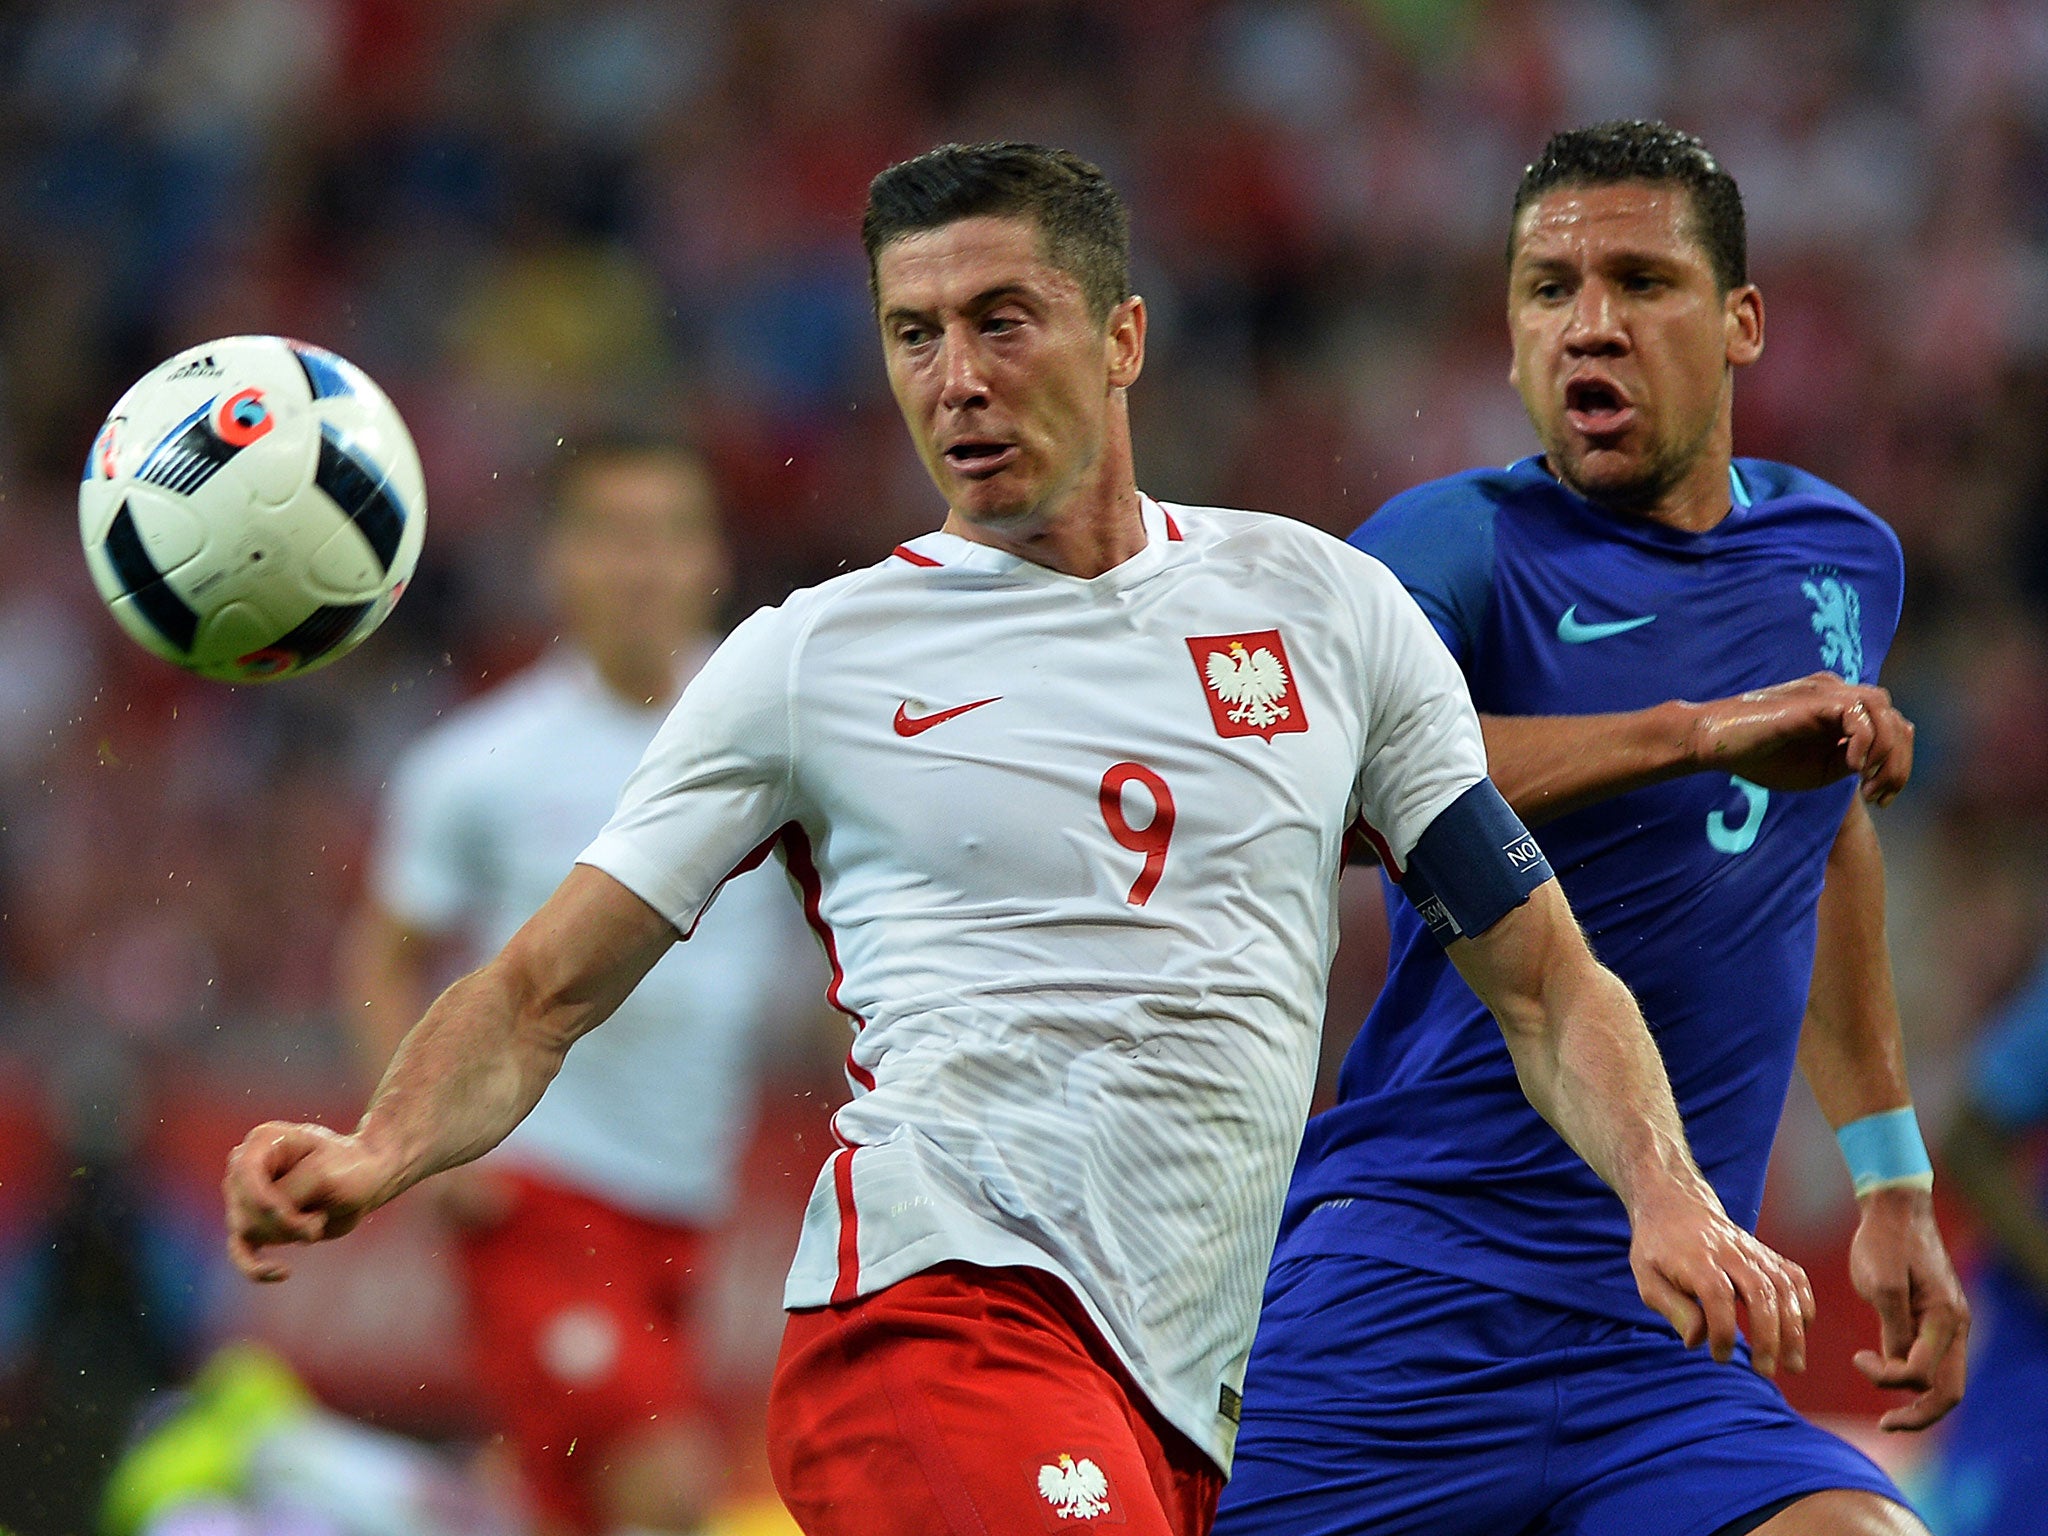 Robert Lewandowski of Poland is arguably the most accomplished striker at Euro 2016